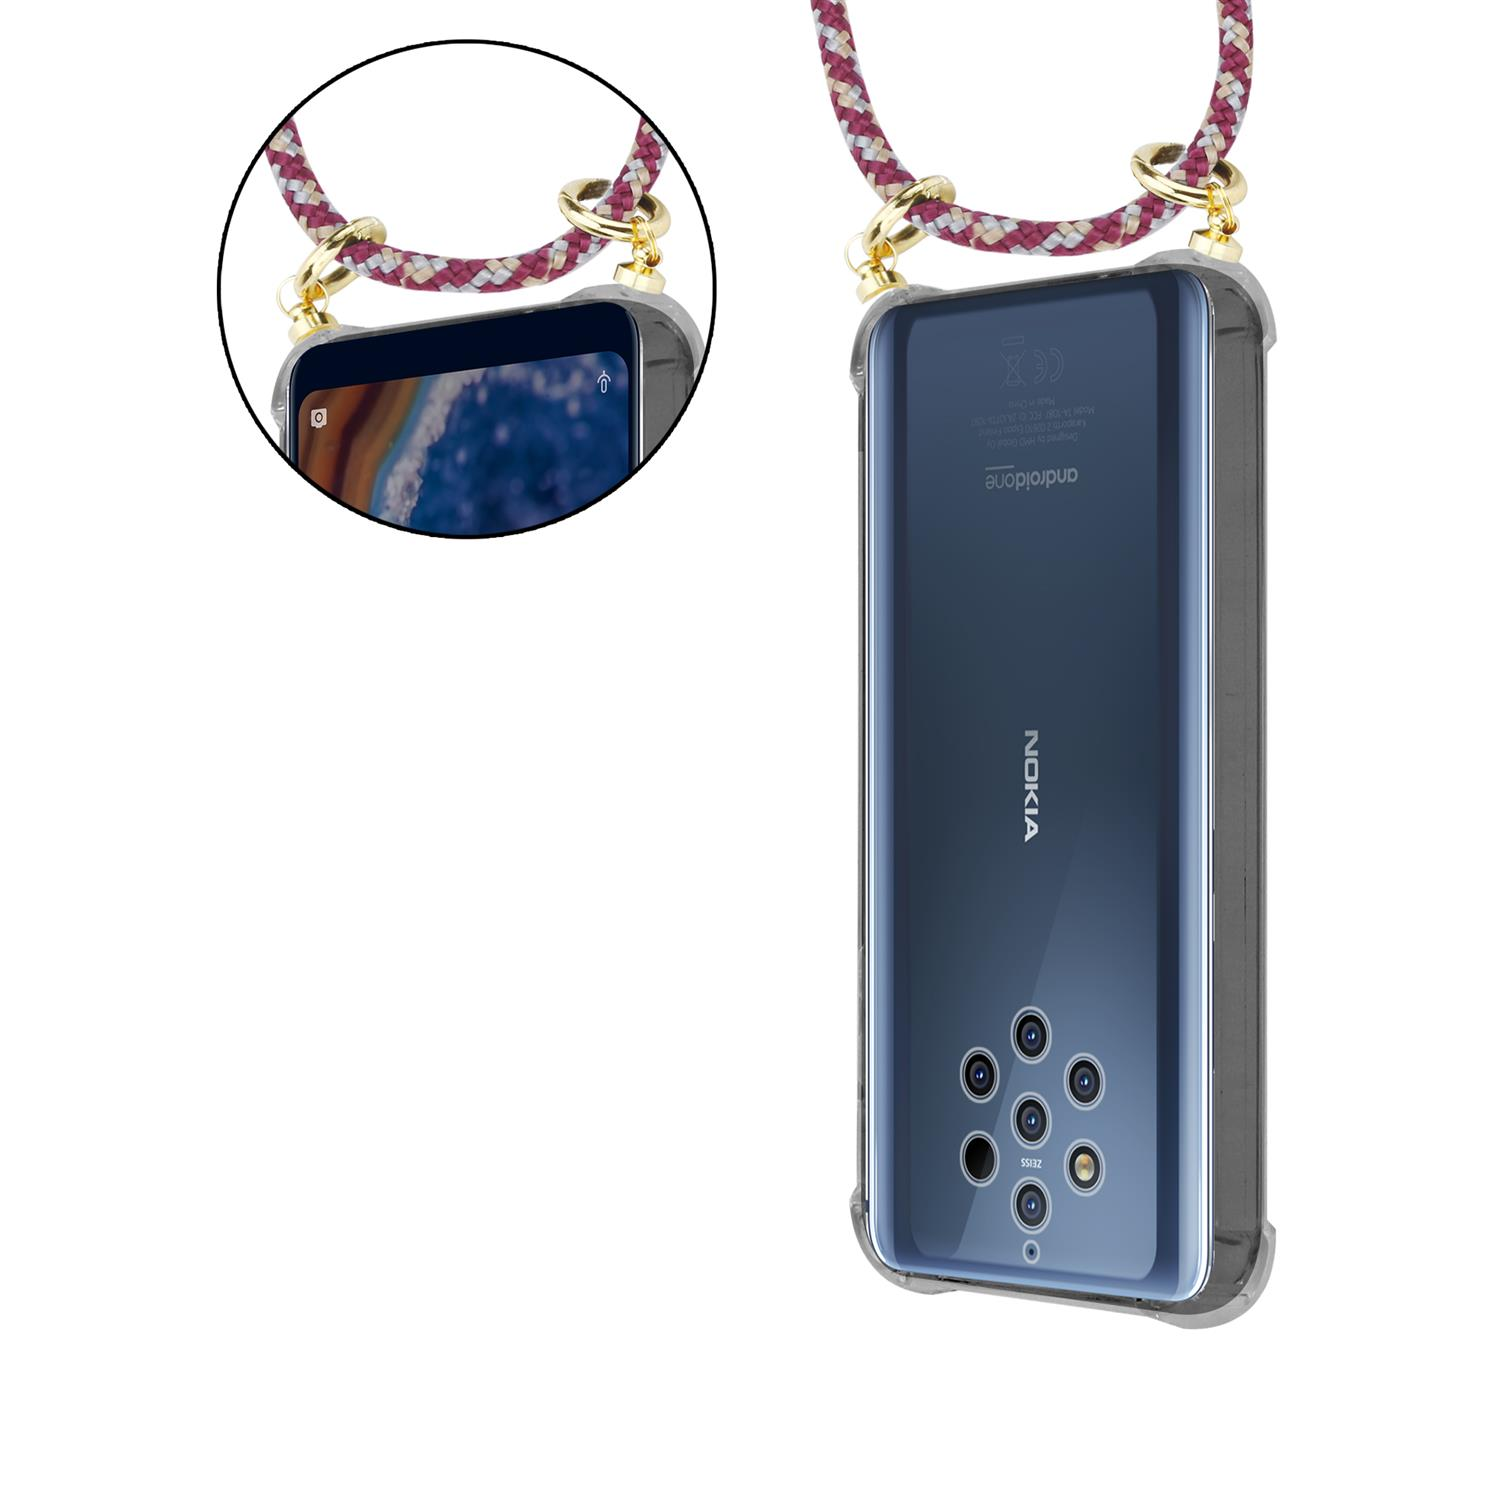 CADORABO Handy Hülle, 2017, und ROT abnehmbarer Kordel Nokia, mit 2 Ringen, Backcover, Kette Band WEIß GELB Gold